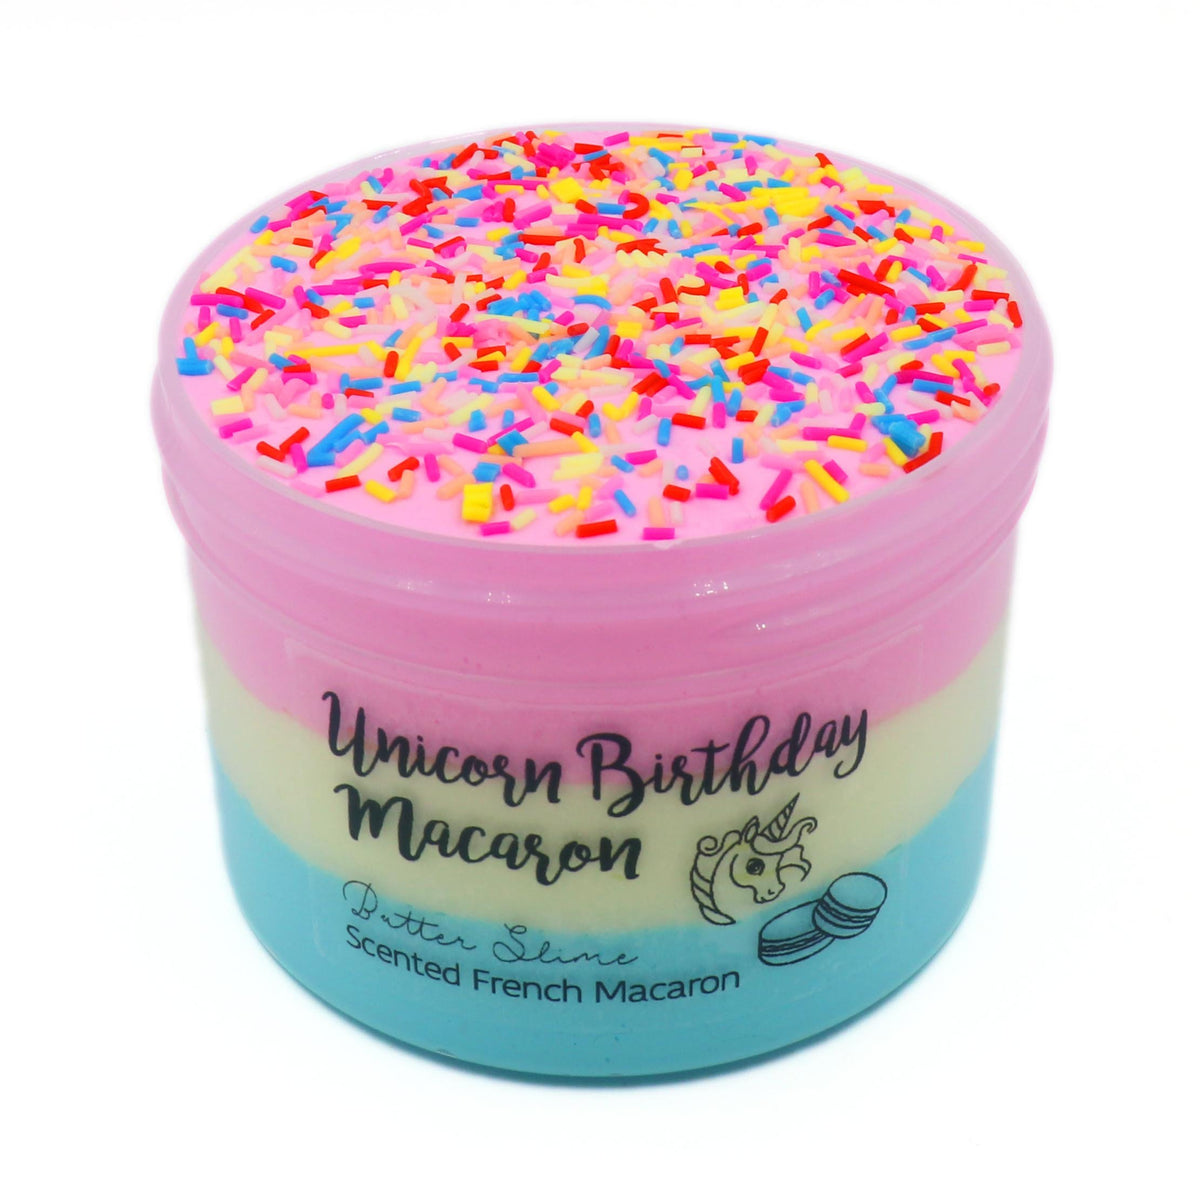 Unicorn Birthday Macaron Butter Slime